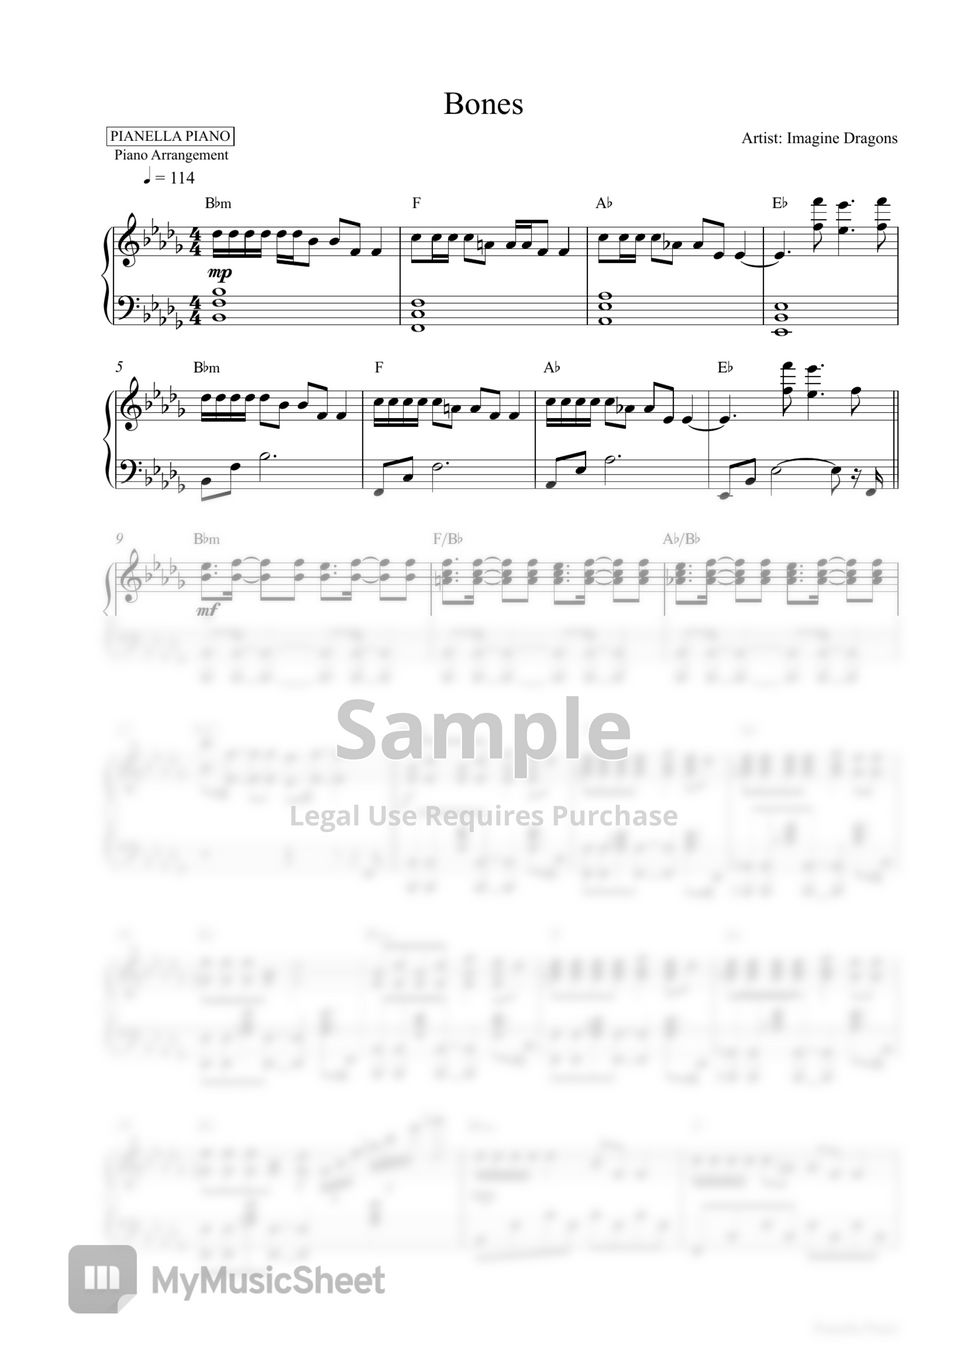 Imagine Dragons - Bones (Piano Sheet) by Pianella Piano